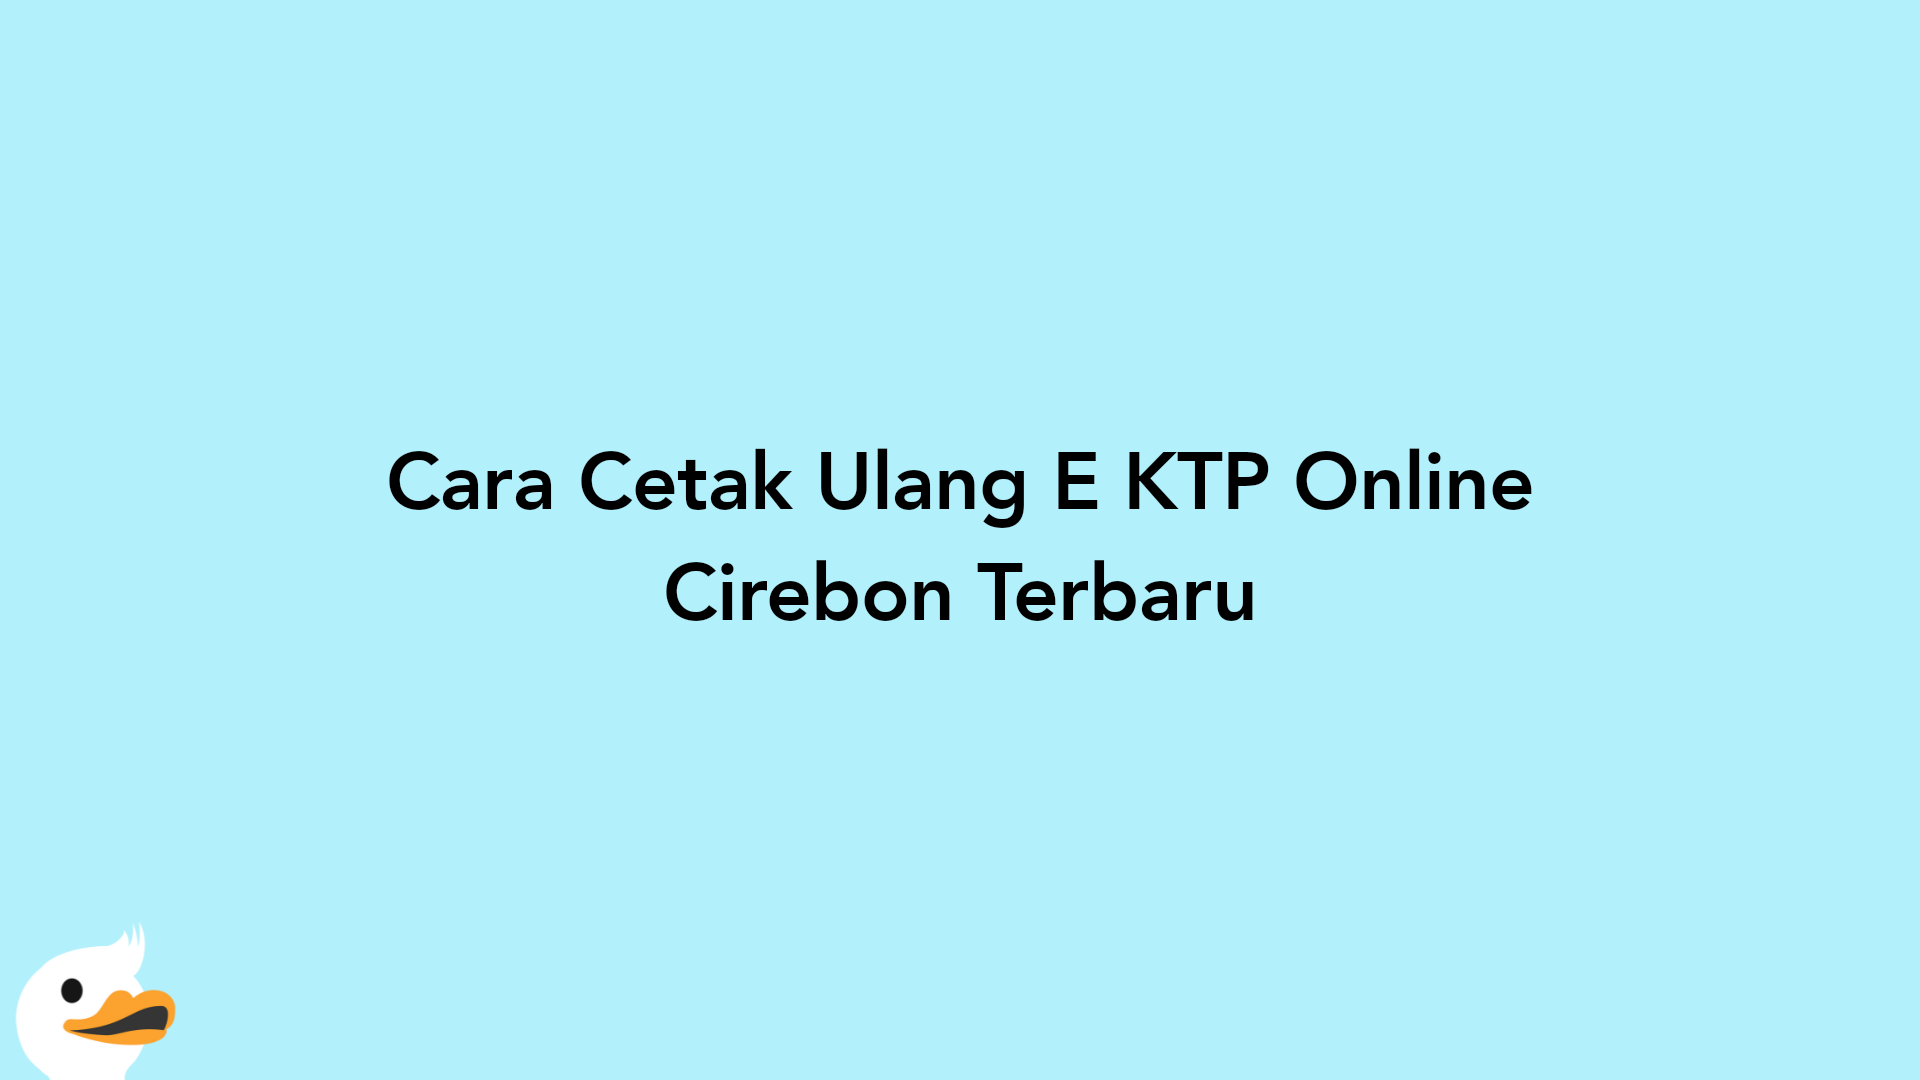 Cara Cetak Ulang E KTP Online Cirebon Terbaru